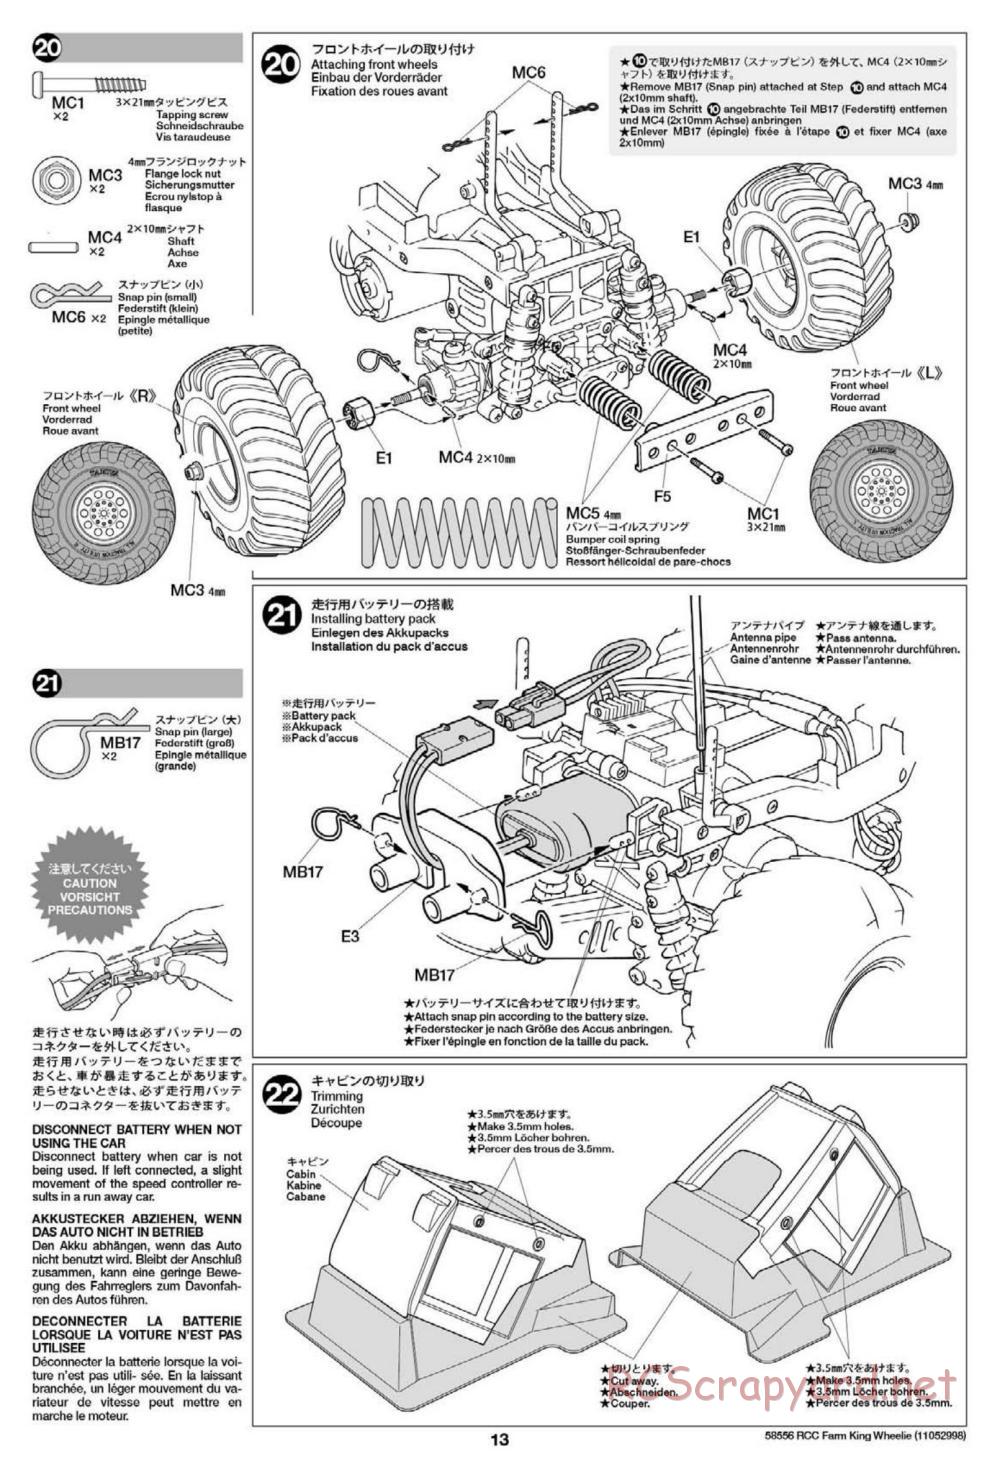 Tamiya - Farm King Wheelie Chassis - Manual - Page 13